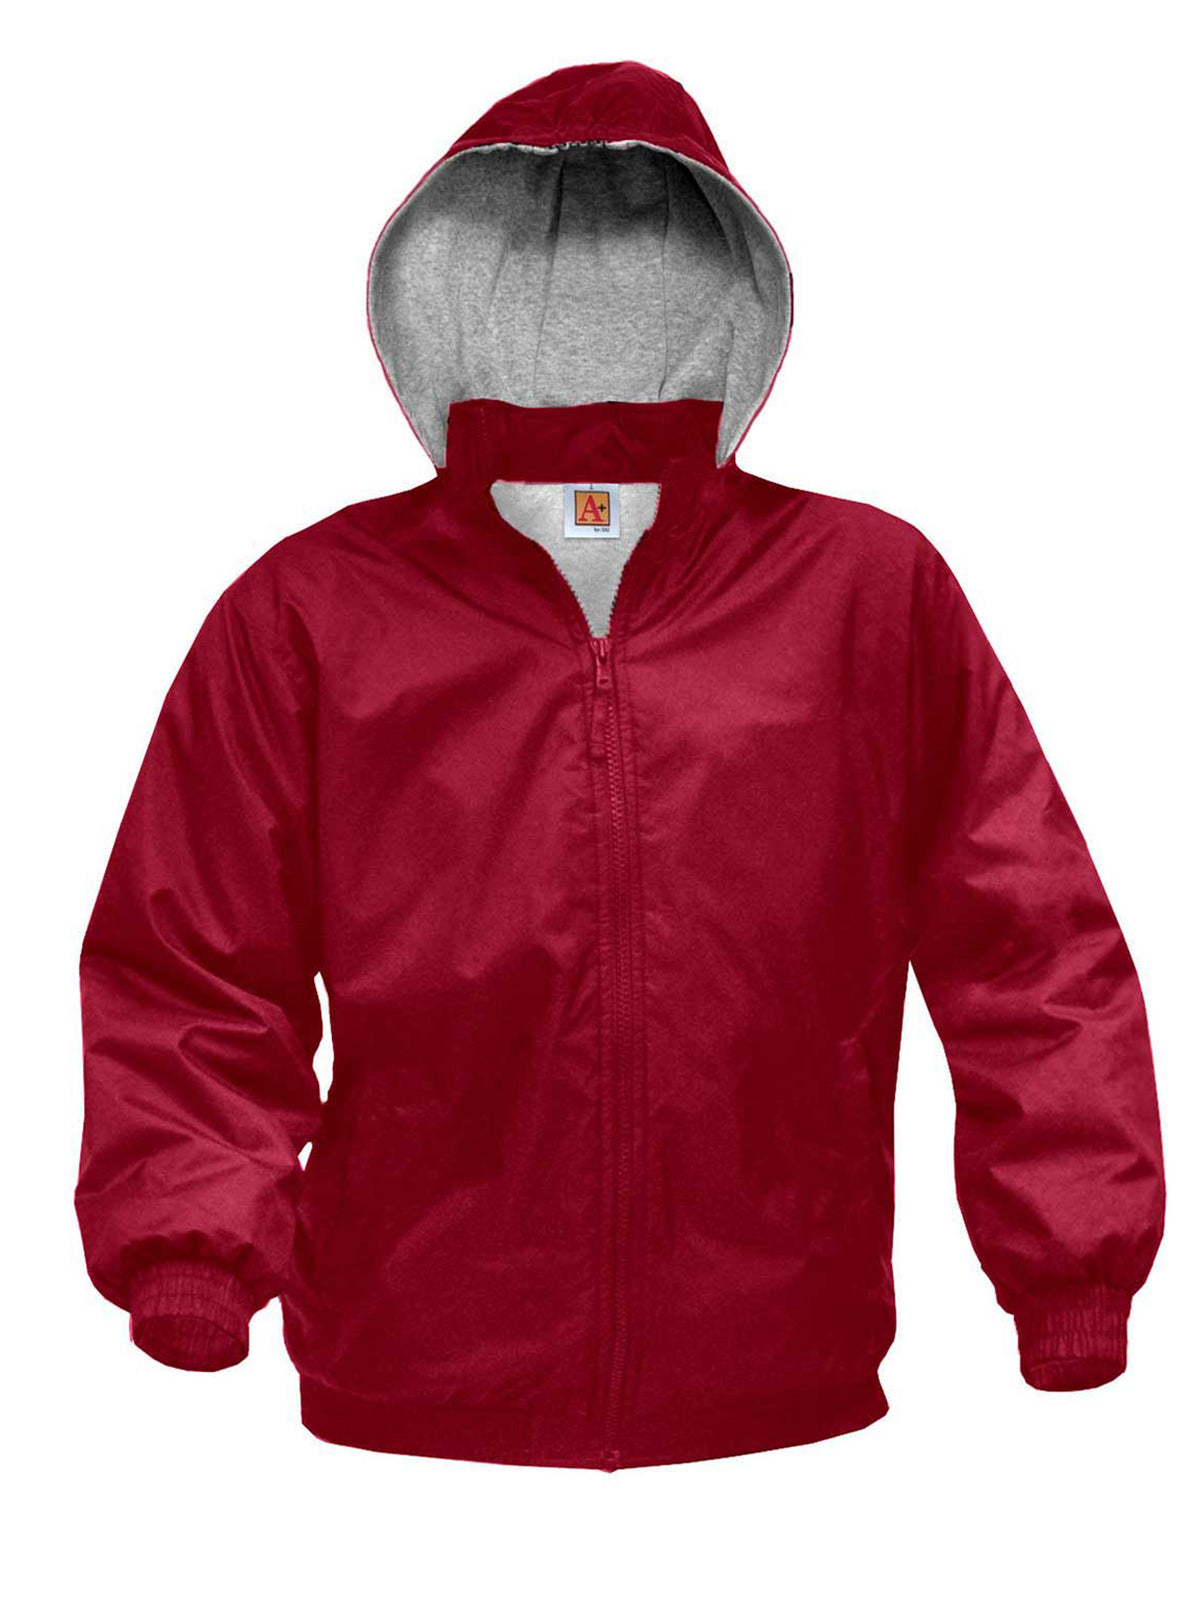 Unisex Nylon Outerwear Jacket - 6225 - Red